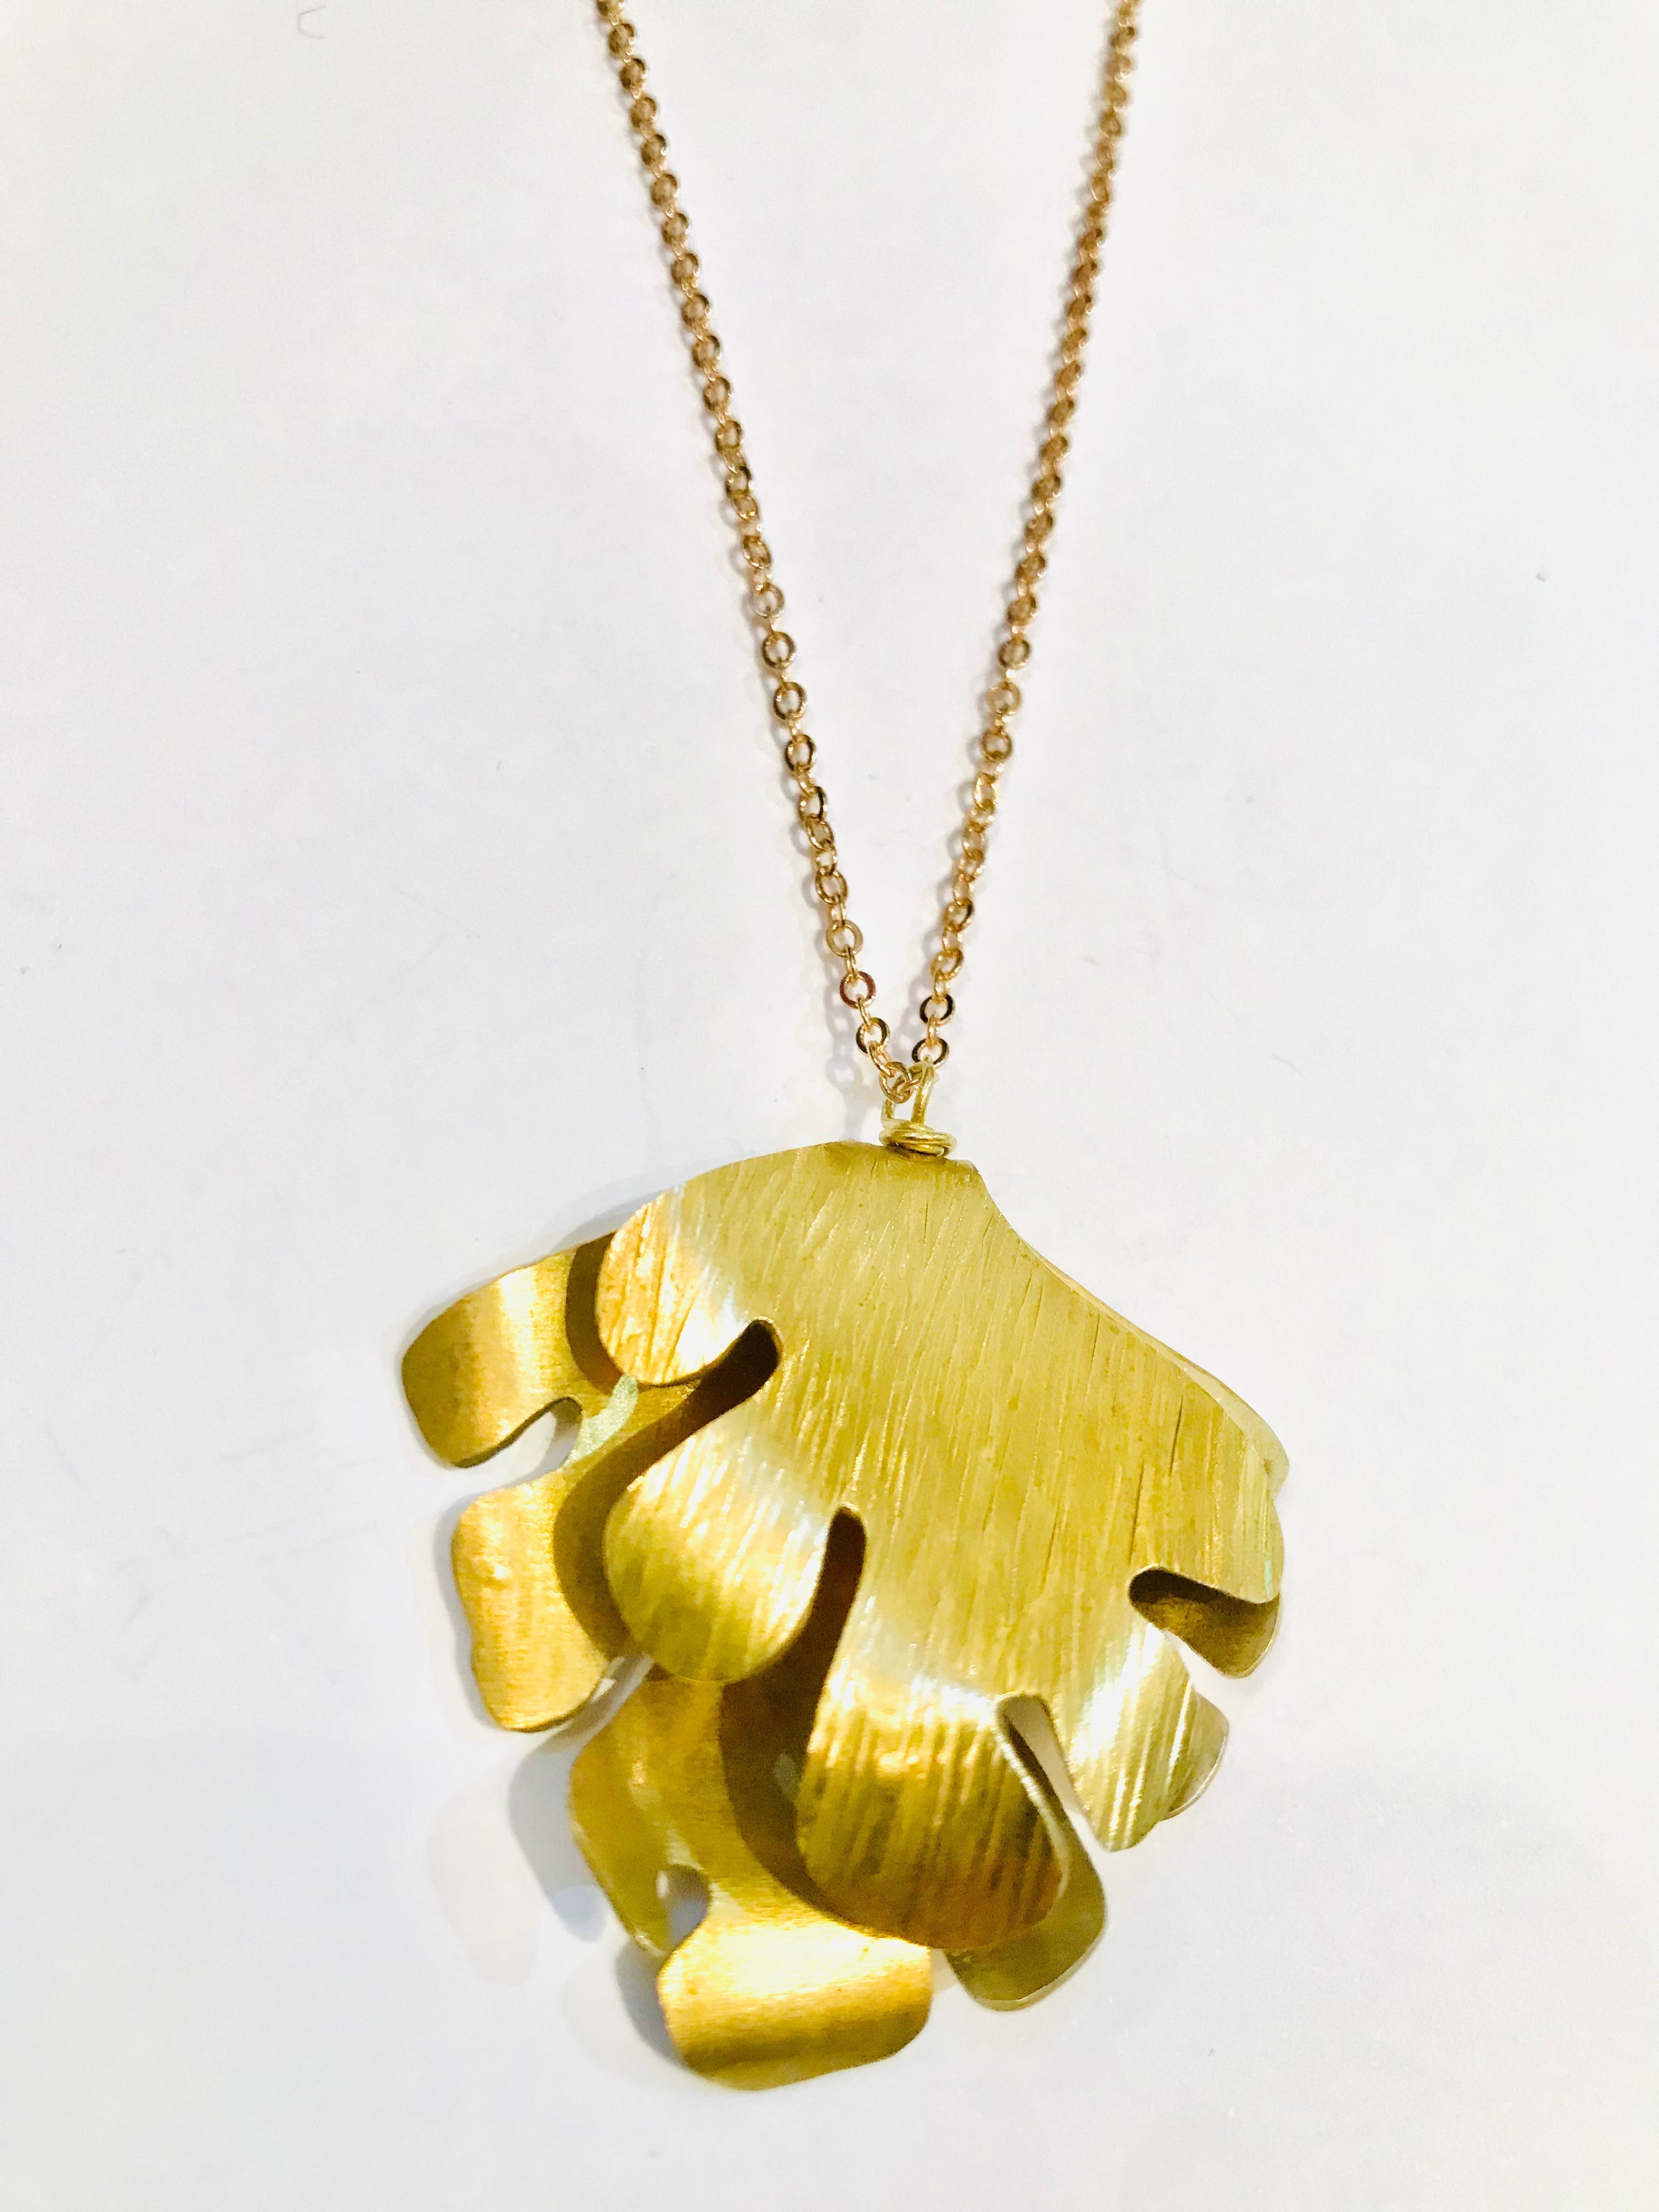 Seaweed Wave Pendant - The Nancy Smillie Shop - Art, Jewellery & Designer Gifts Glasgow